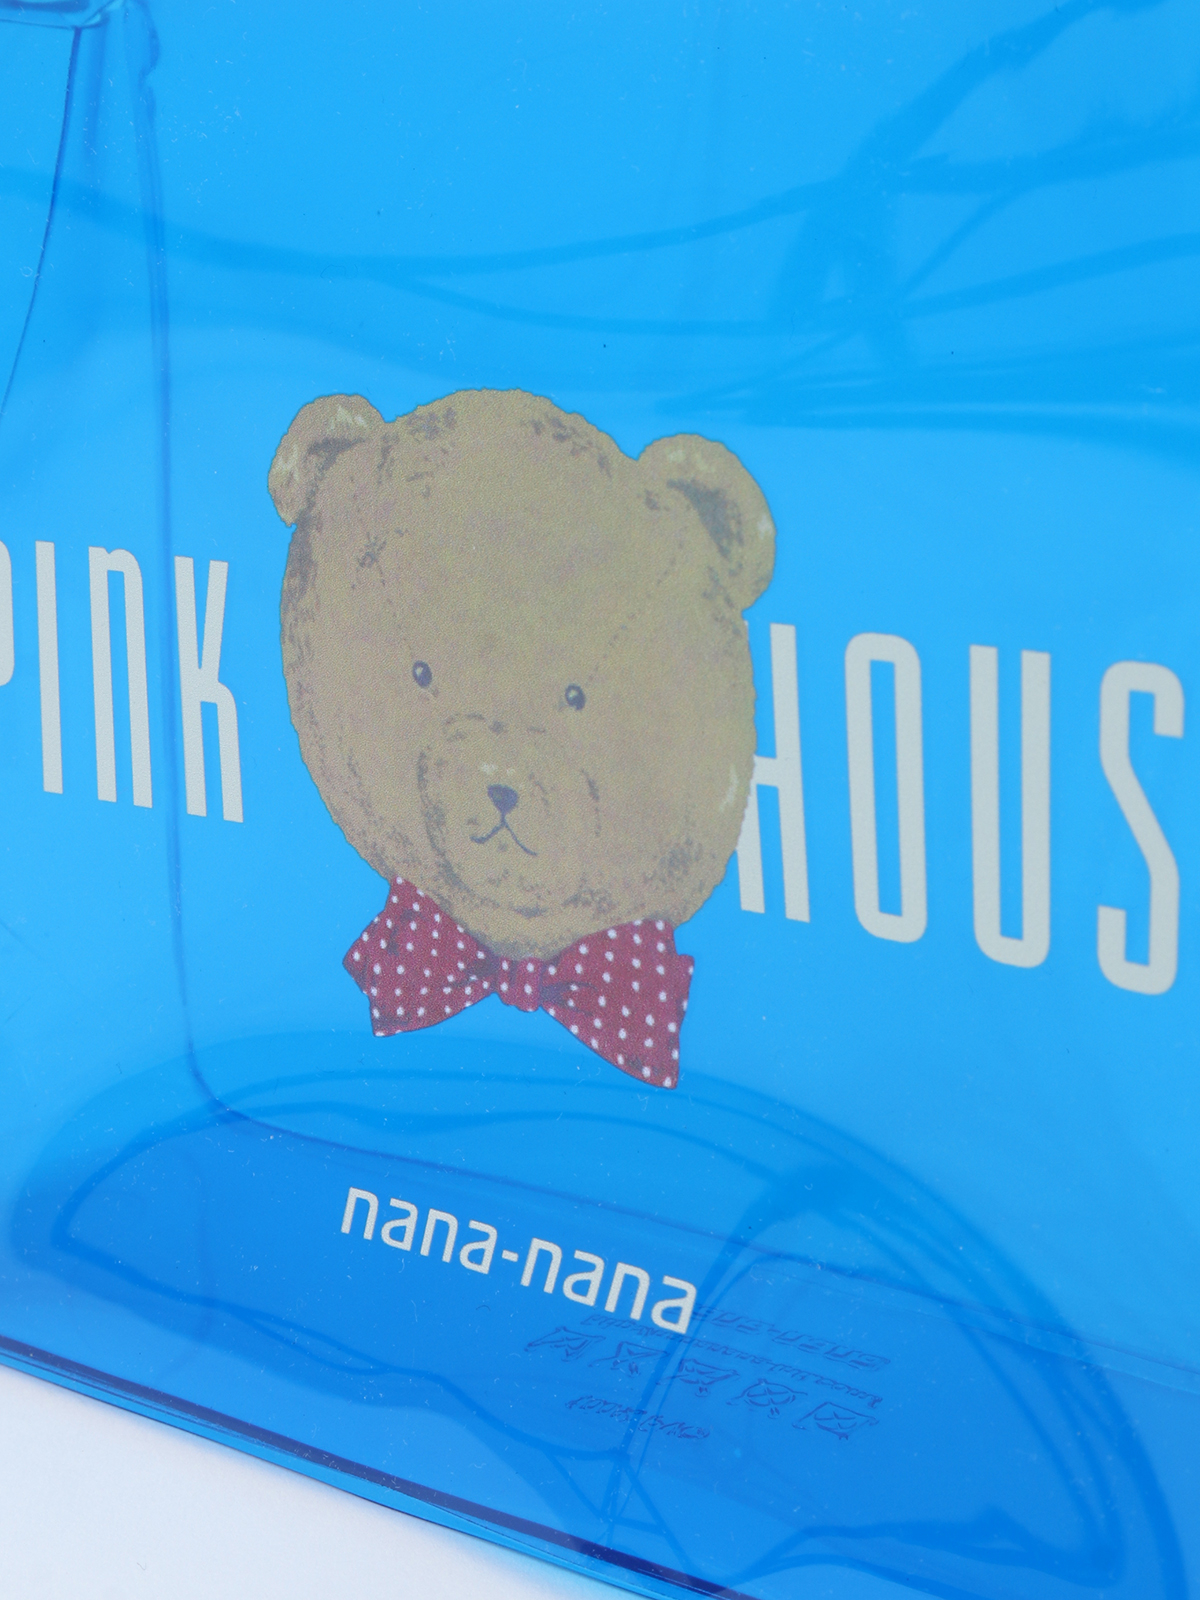 【PINK HOUSE×nana-nana】顔クマB6PVCショルダーバッグ